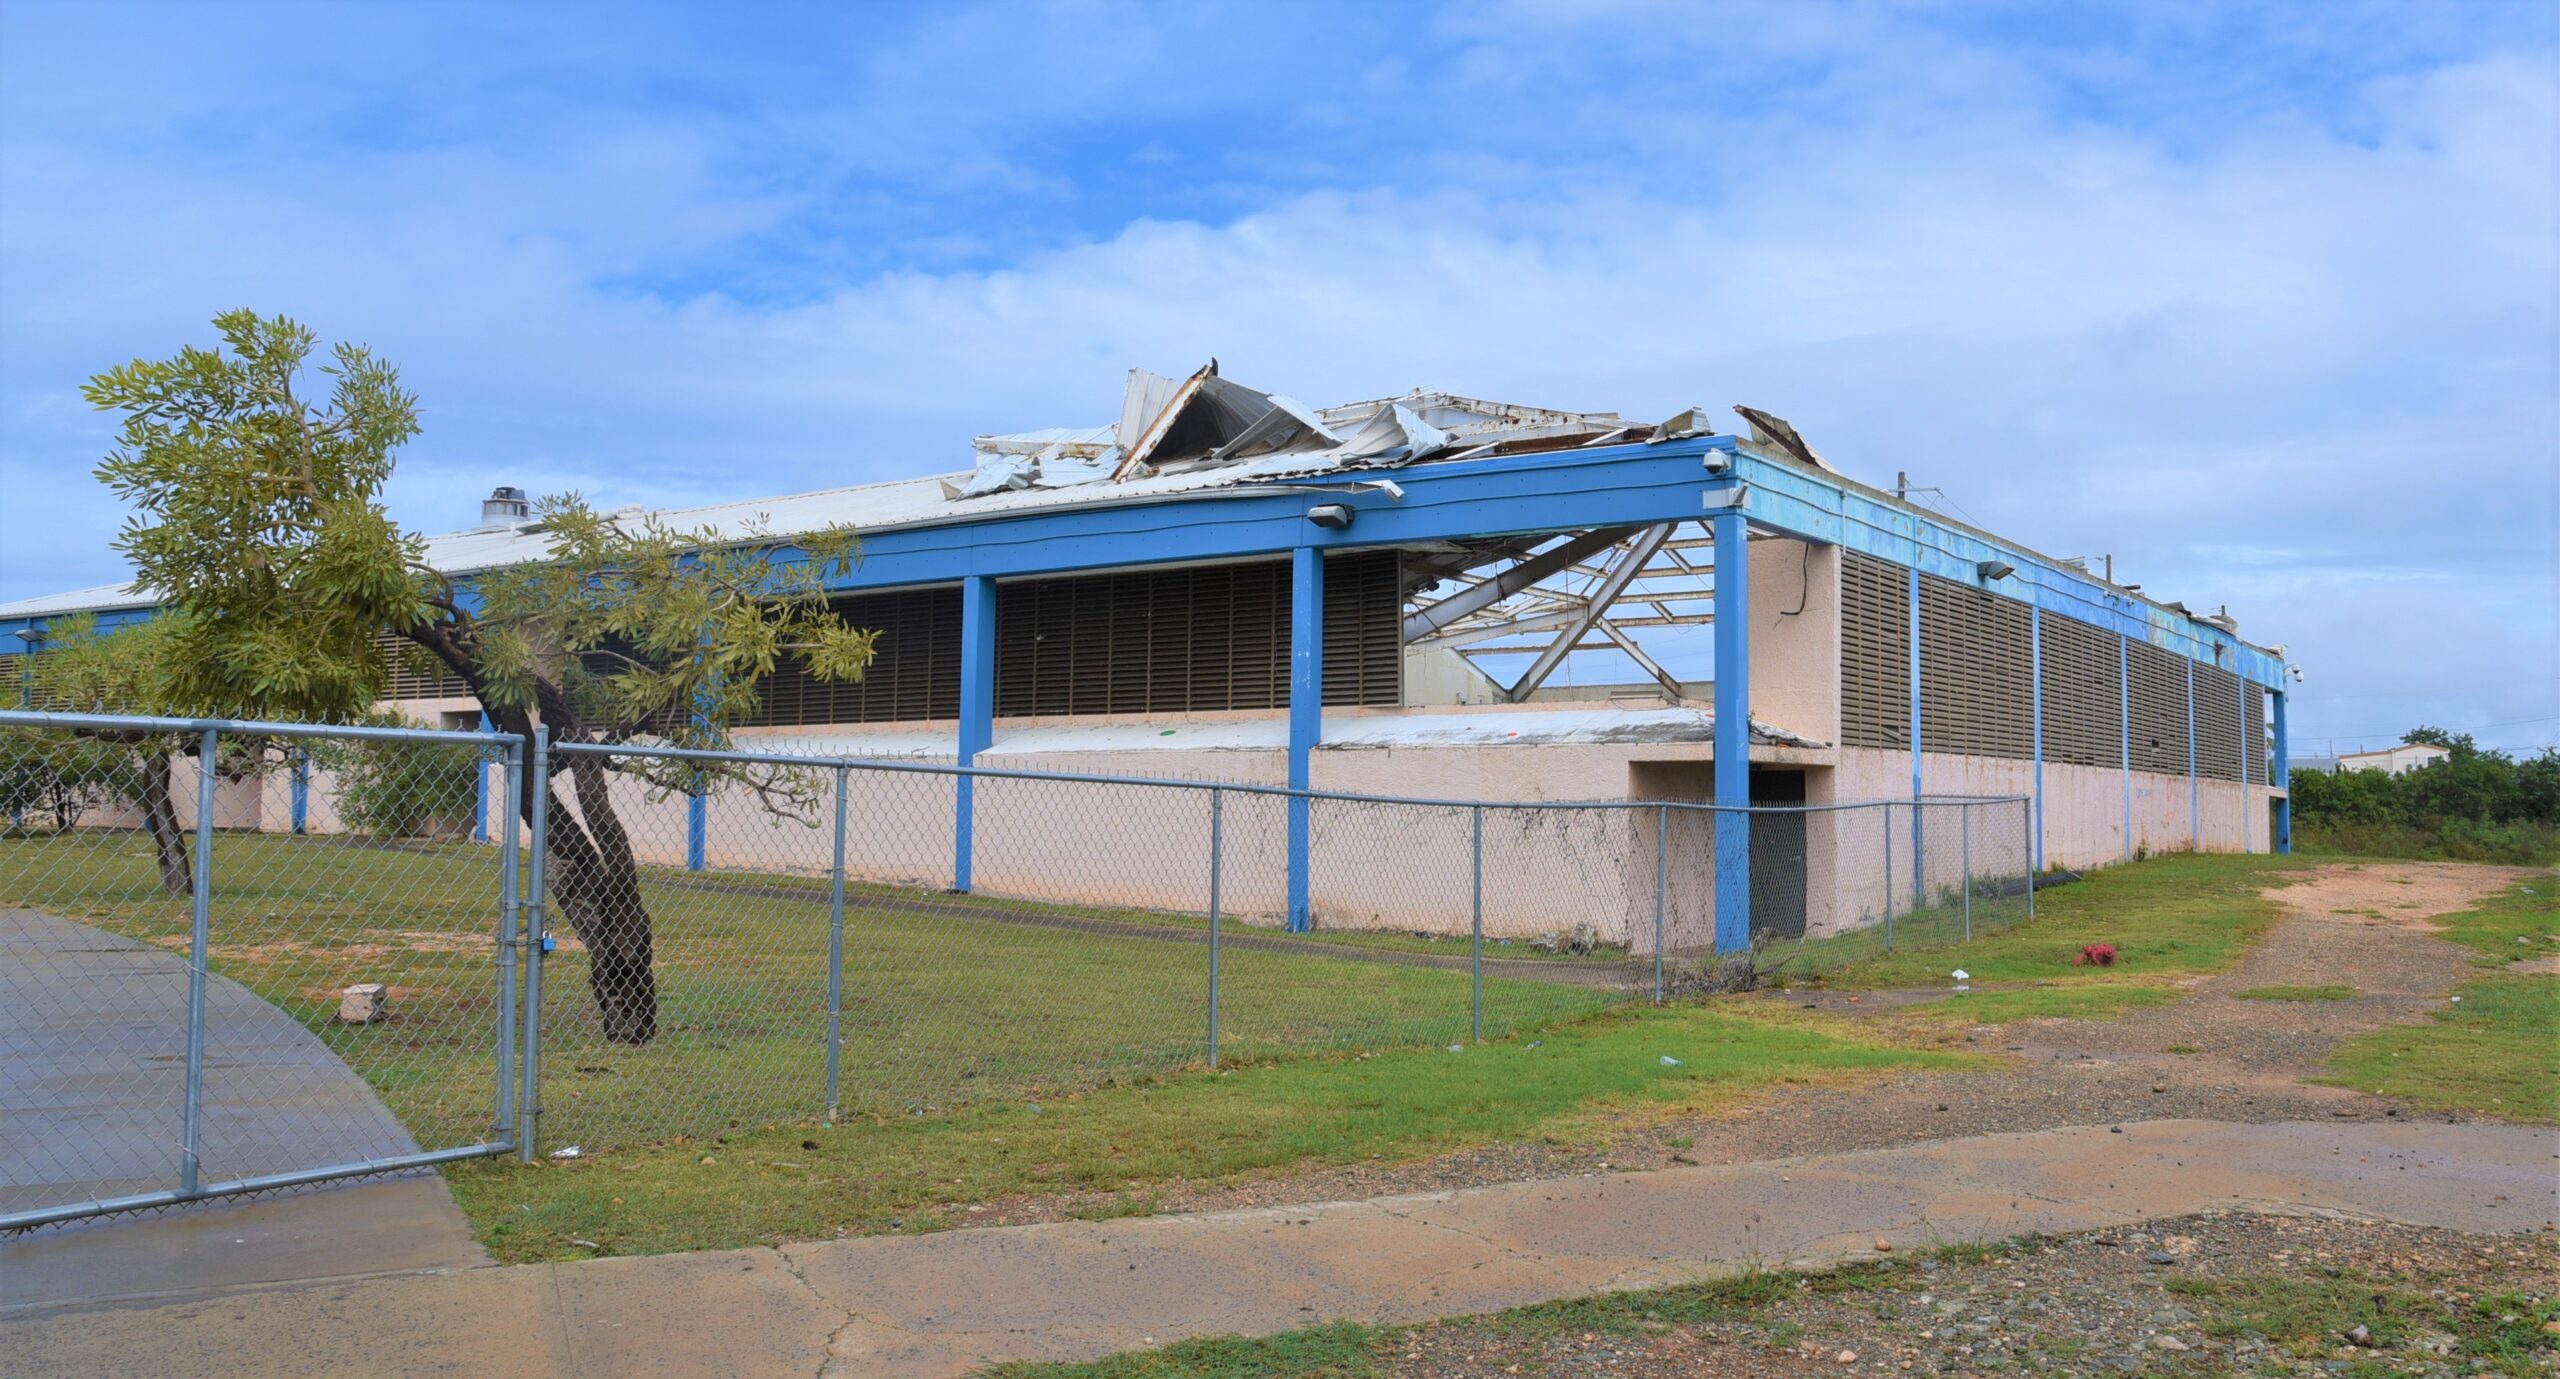 FEMA: Arthur A. Richards Junior High School Can Be Replaced After Hurricane Maria Damage